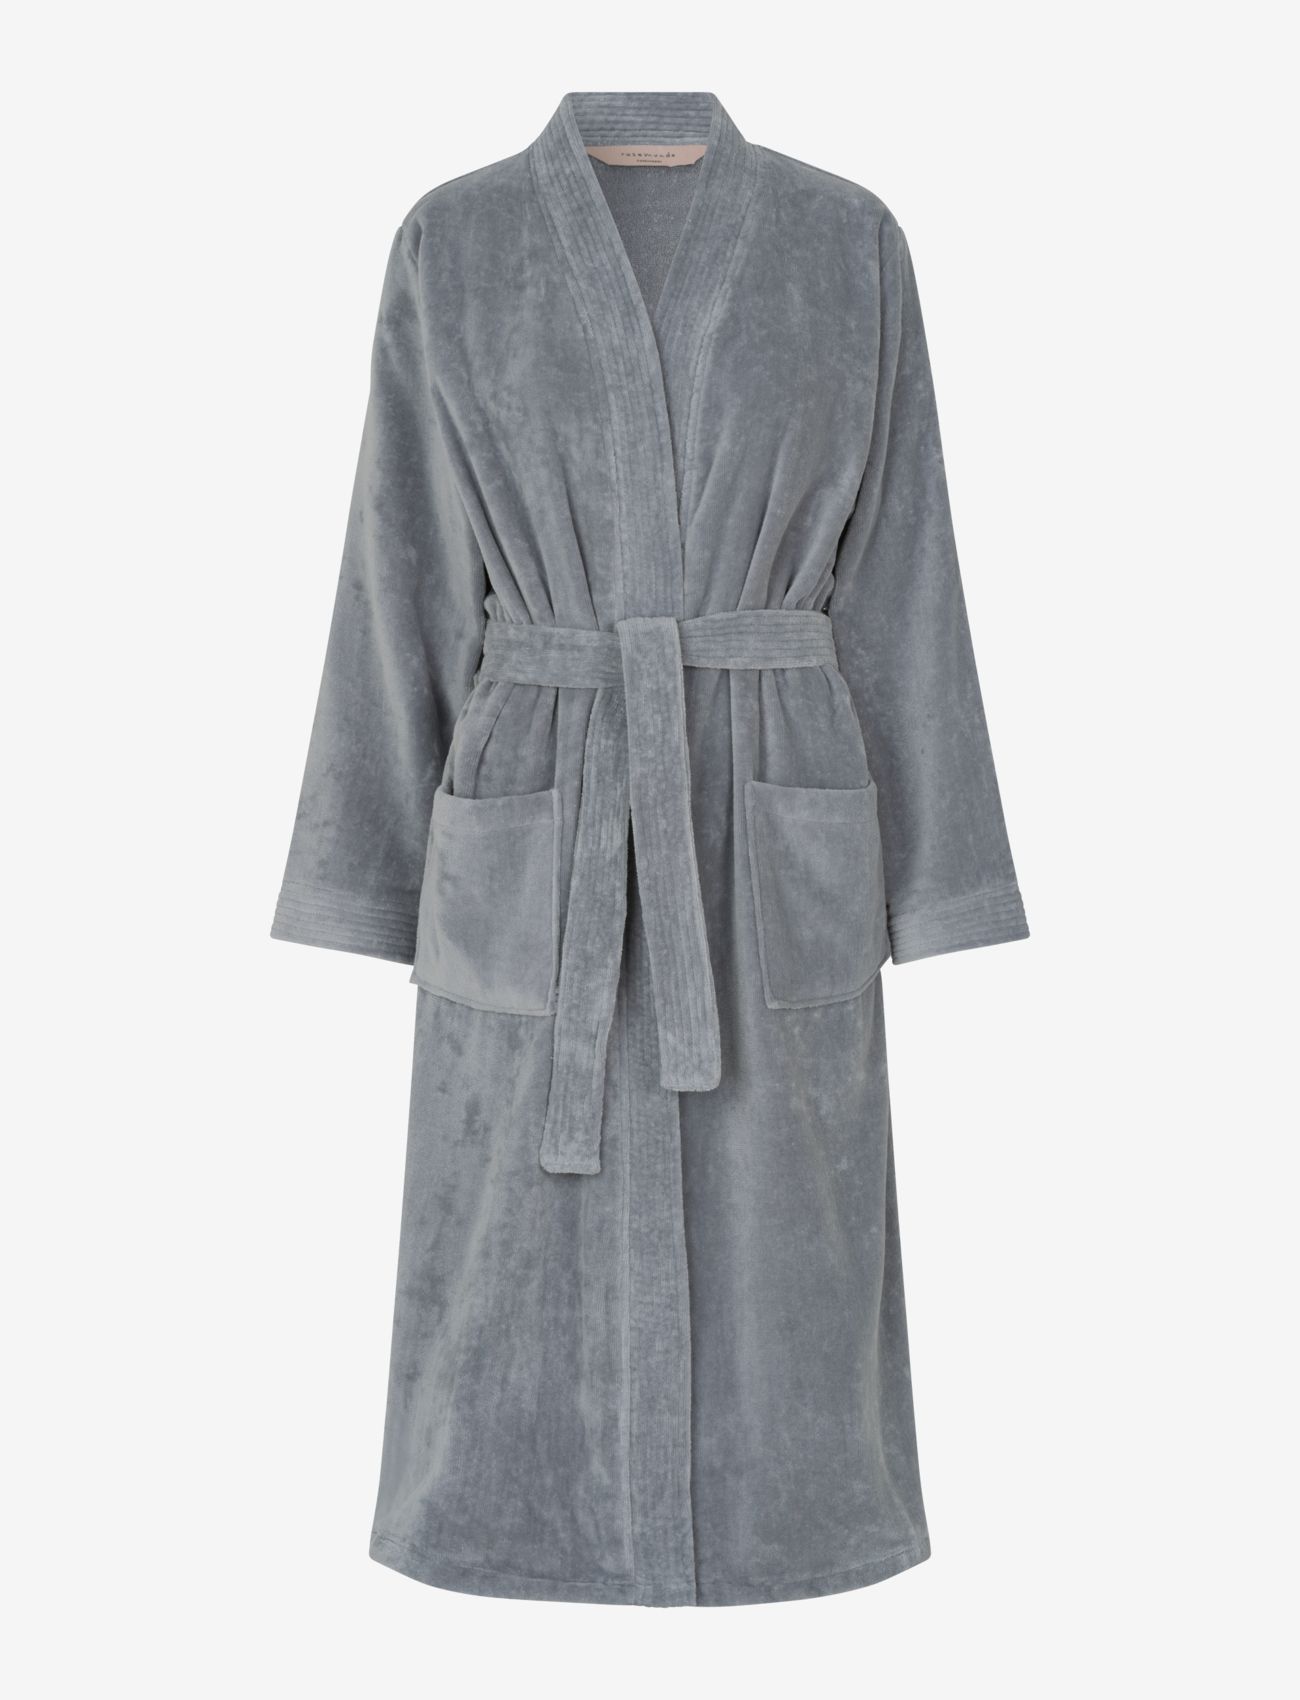 Rosemunde - Organic robe - kylpytakit - charcoal grey - 0